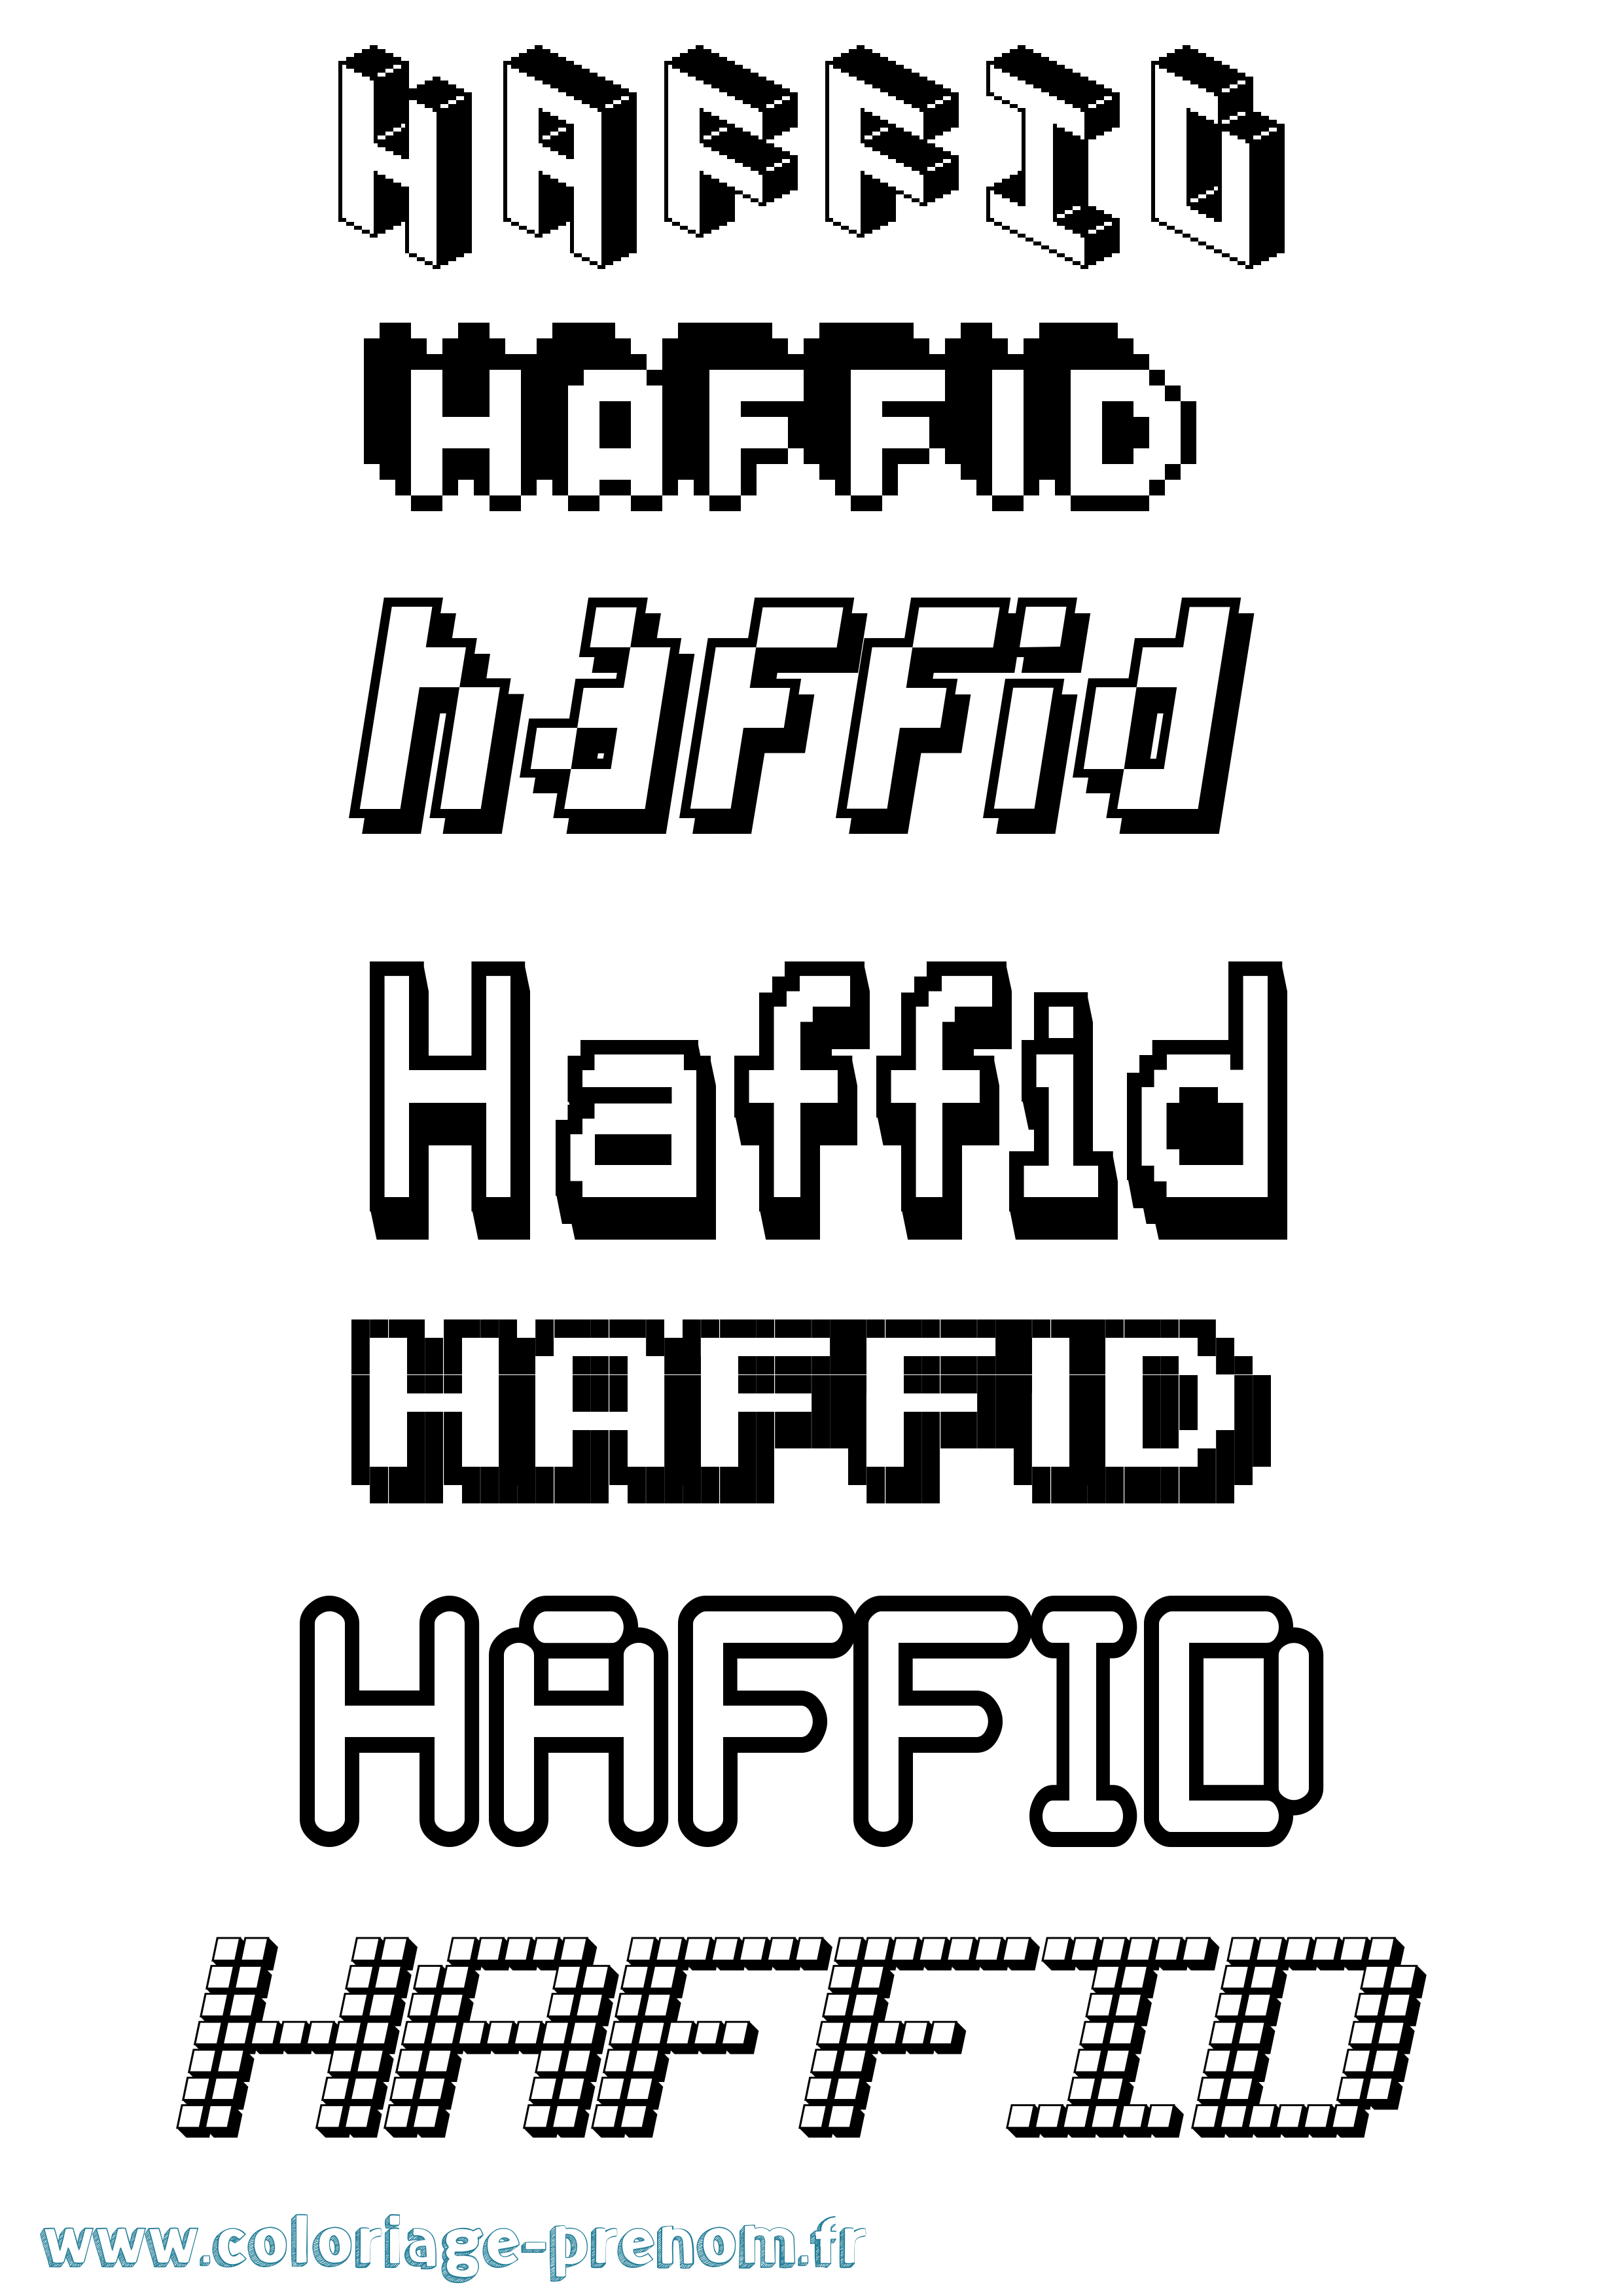 Coloriage prénom Haffid Pixel